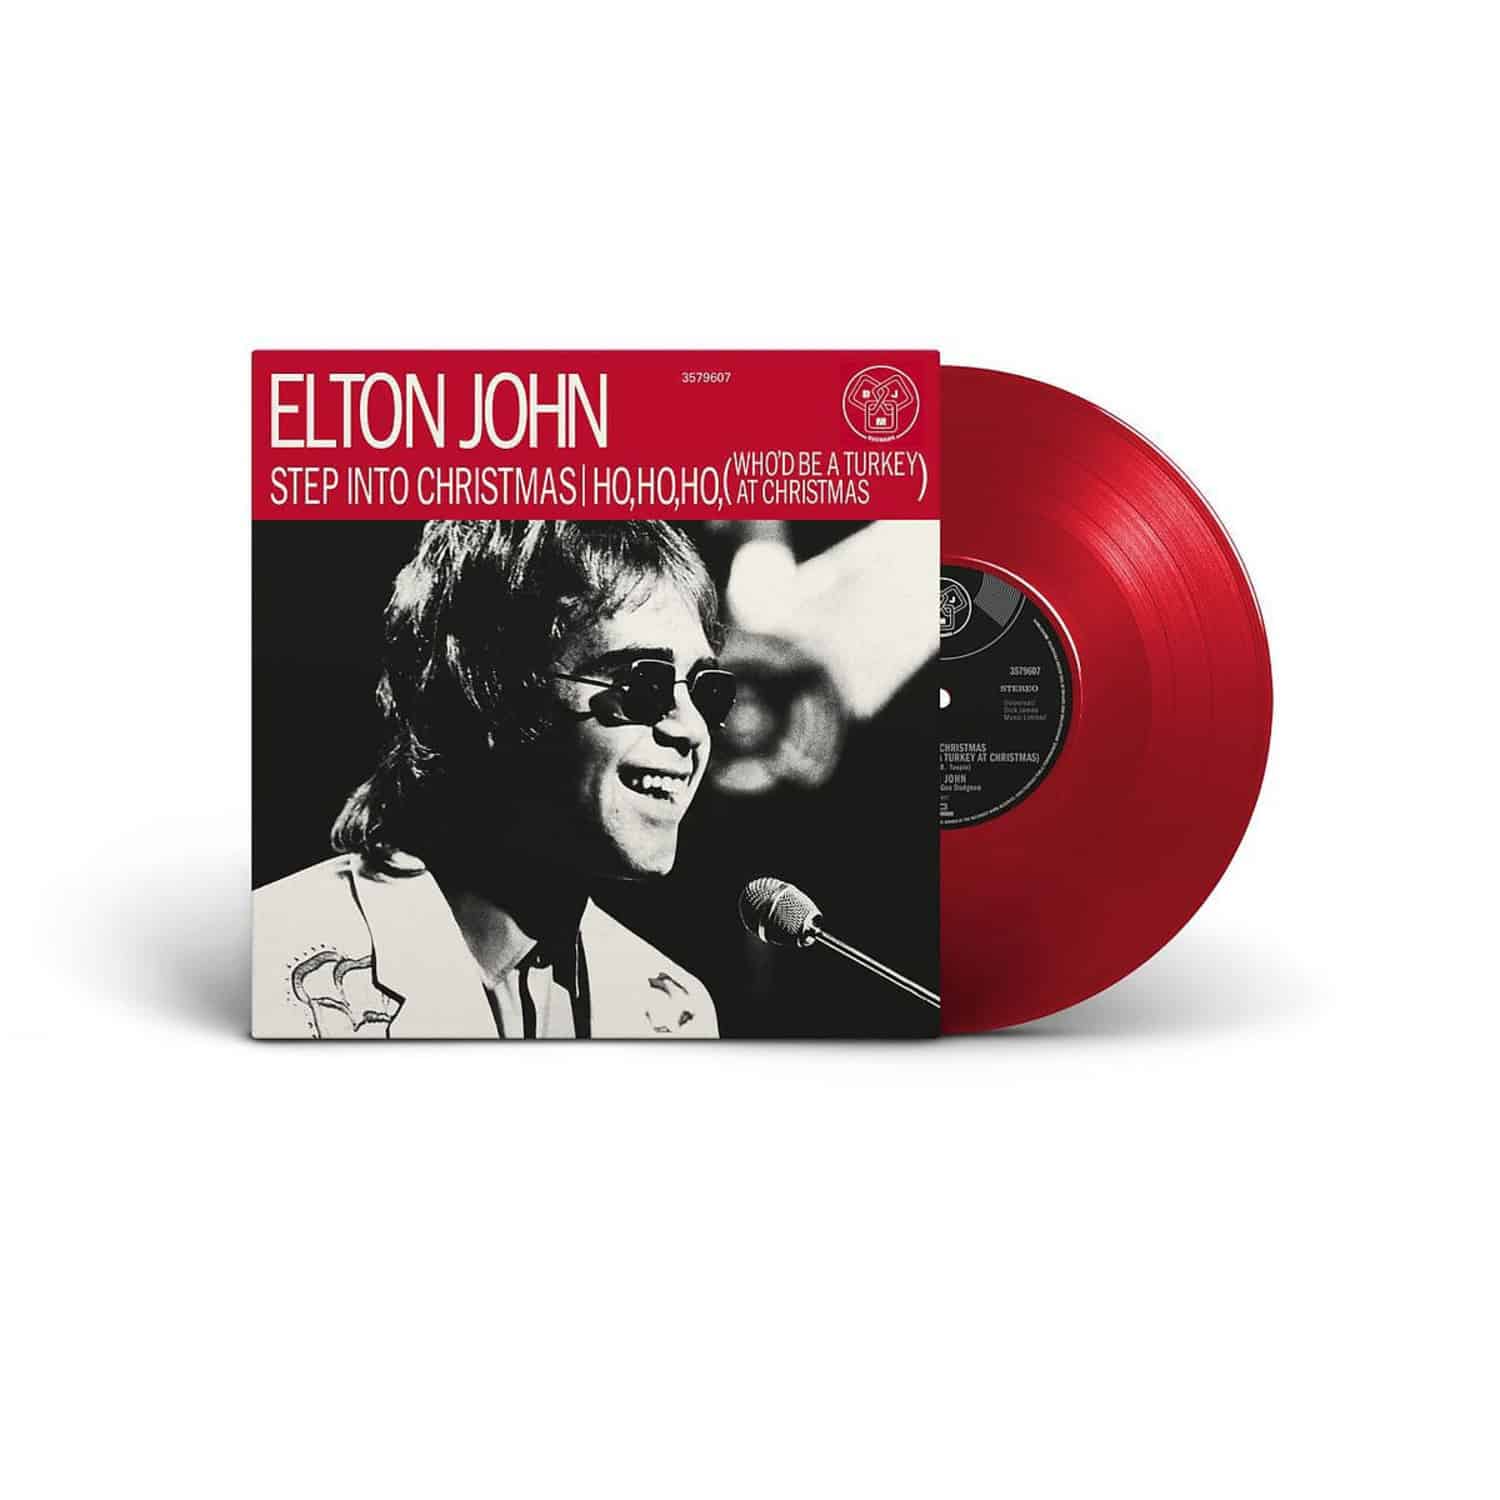 Elton John - STEP INTO CHRISTMAS 